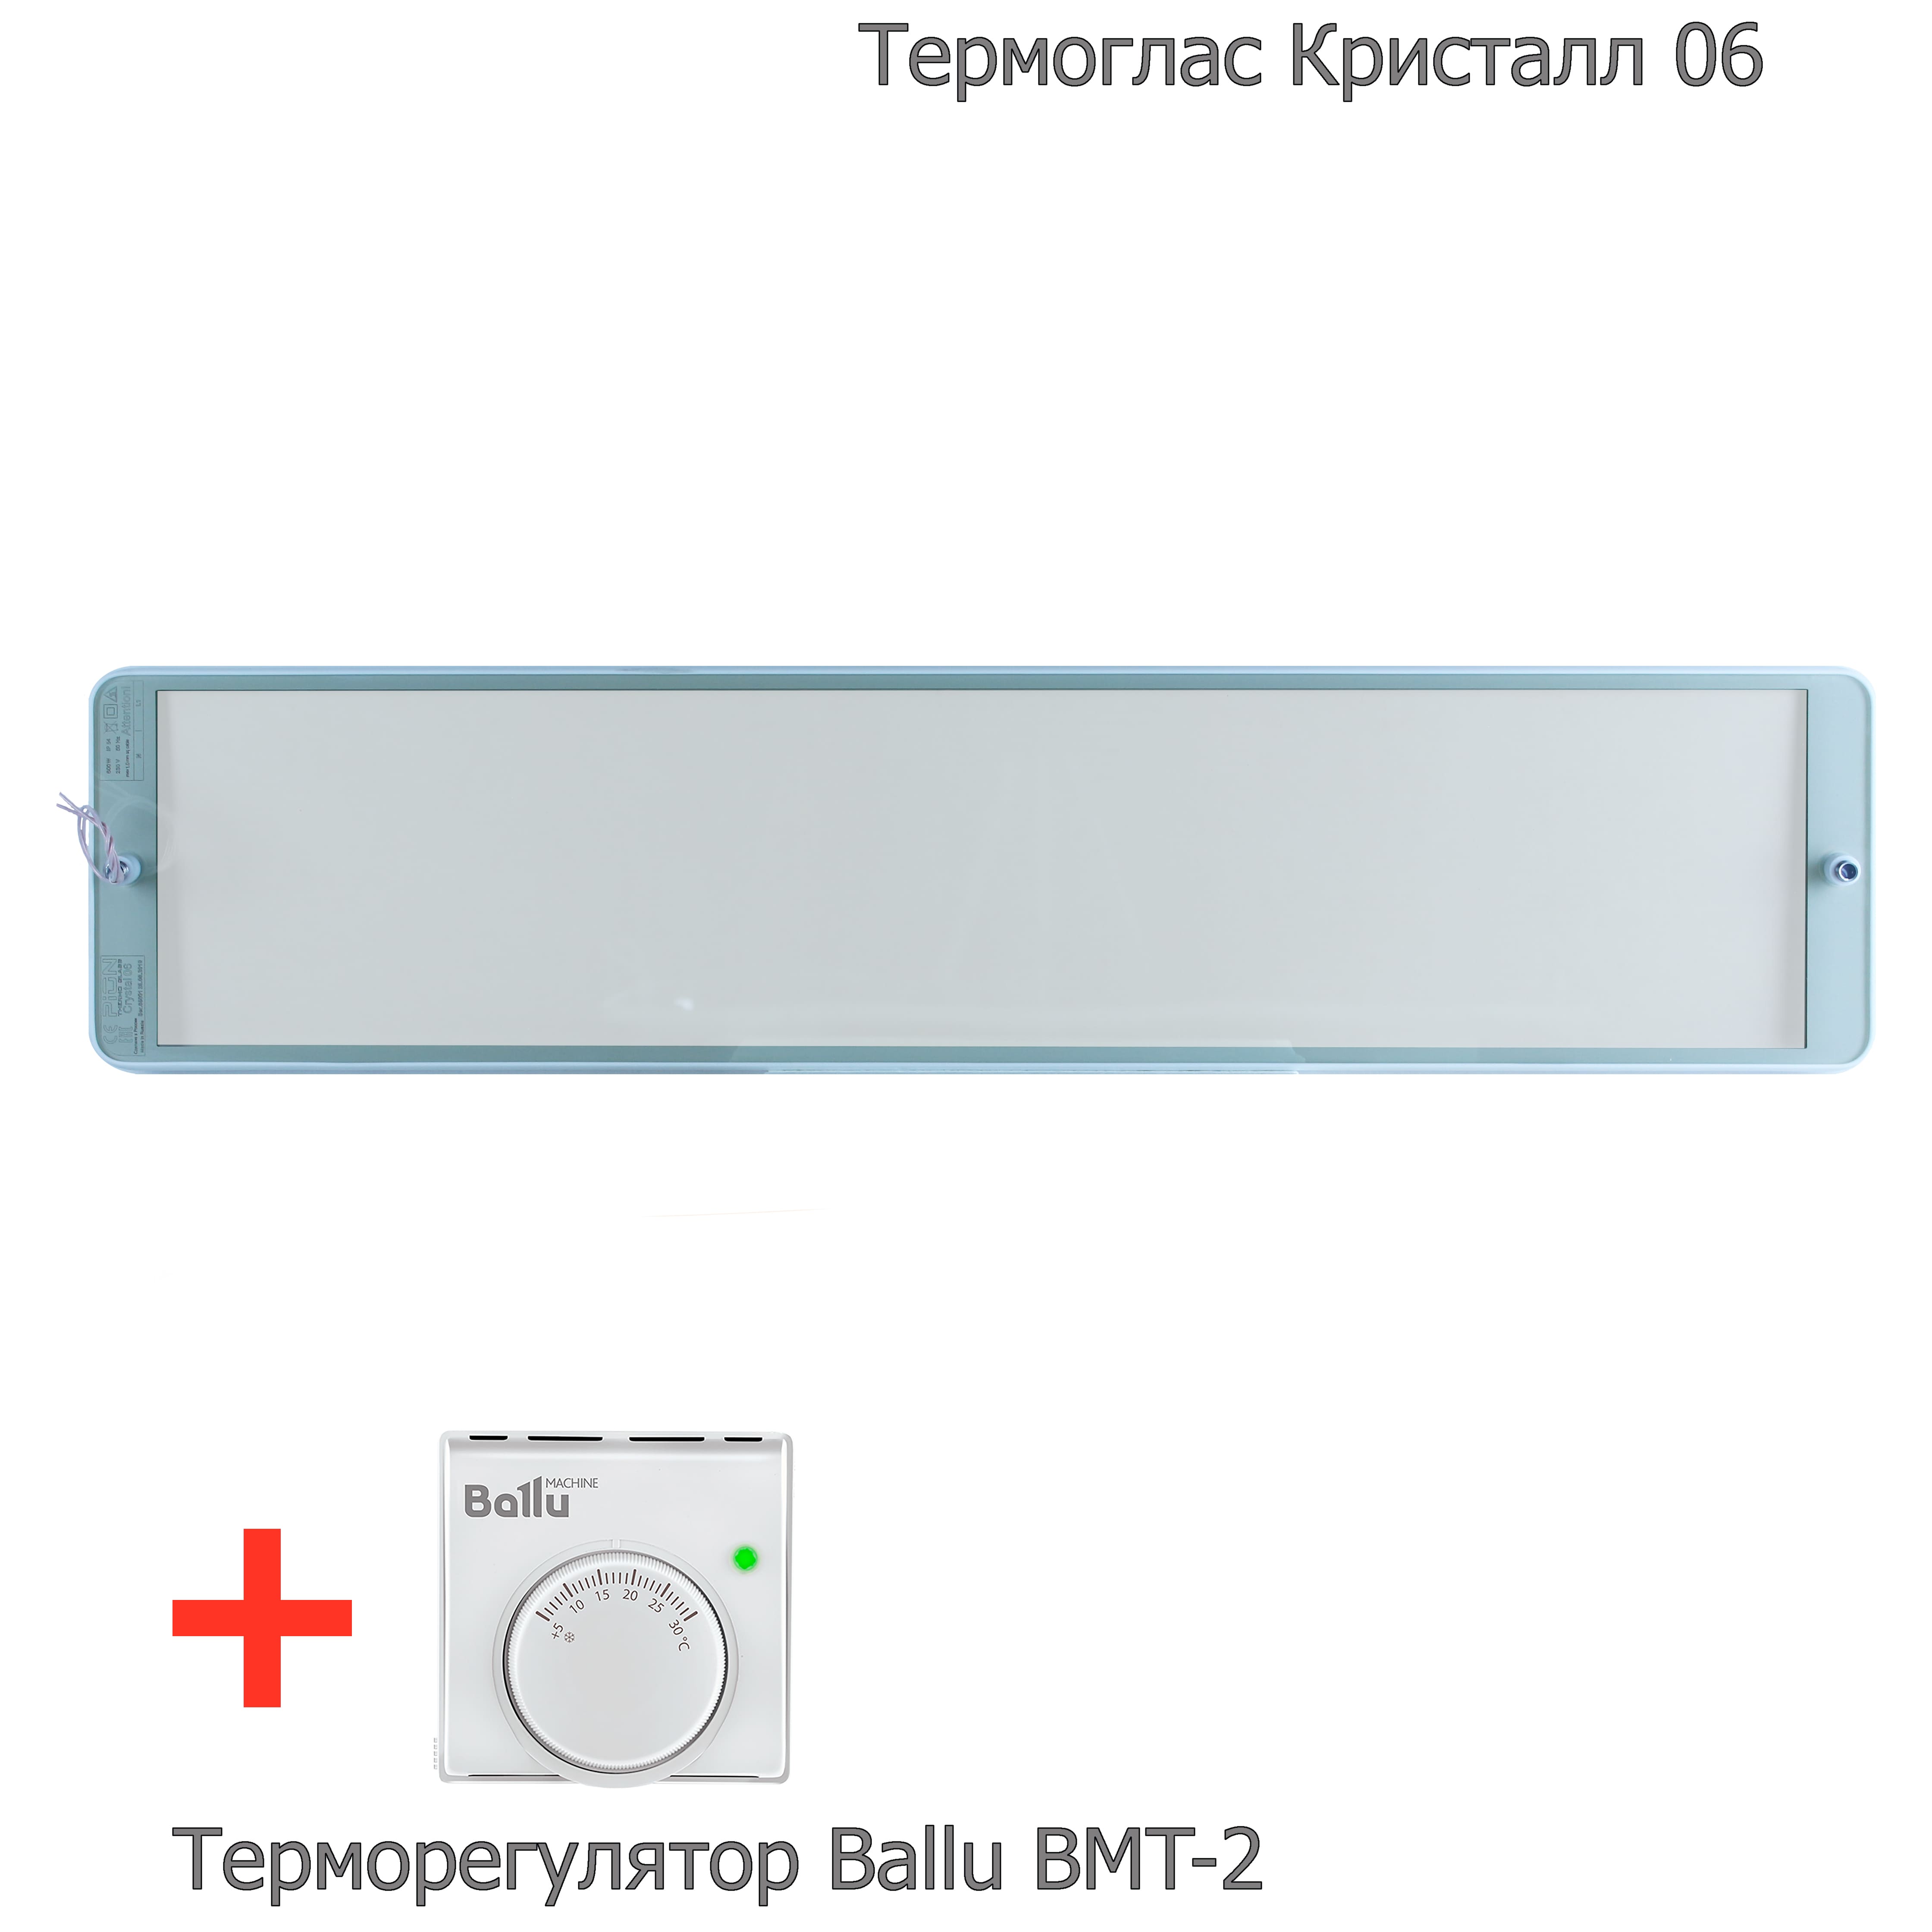 Потолочный обогреватель ПИОН Термоглас Кристалл 06 с терморегулятором Ballu BMT-2